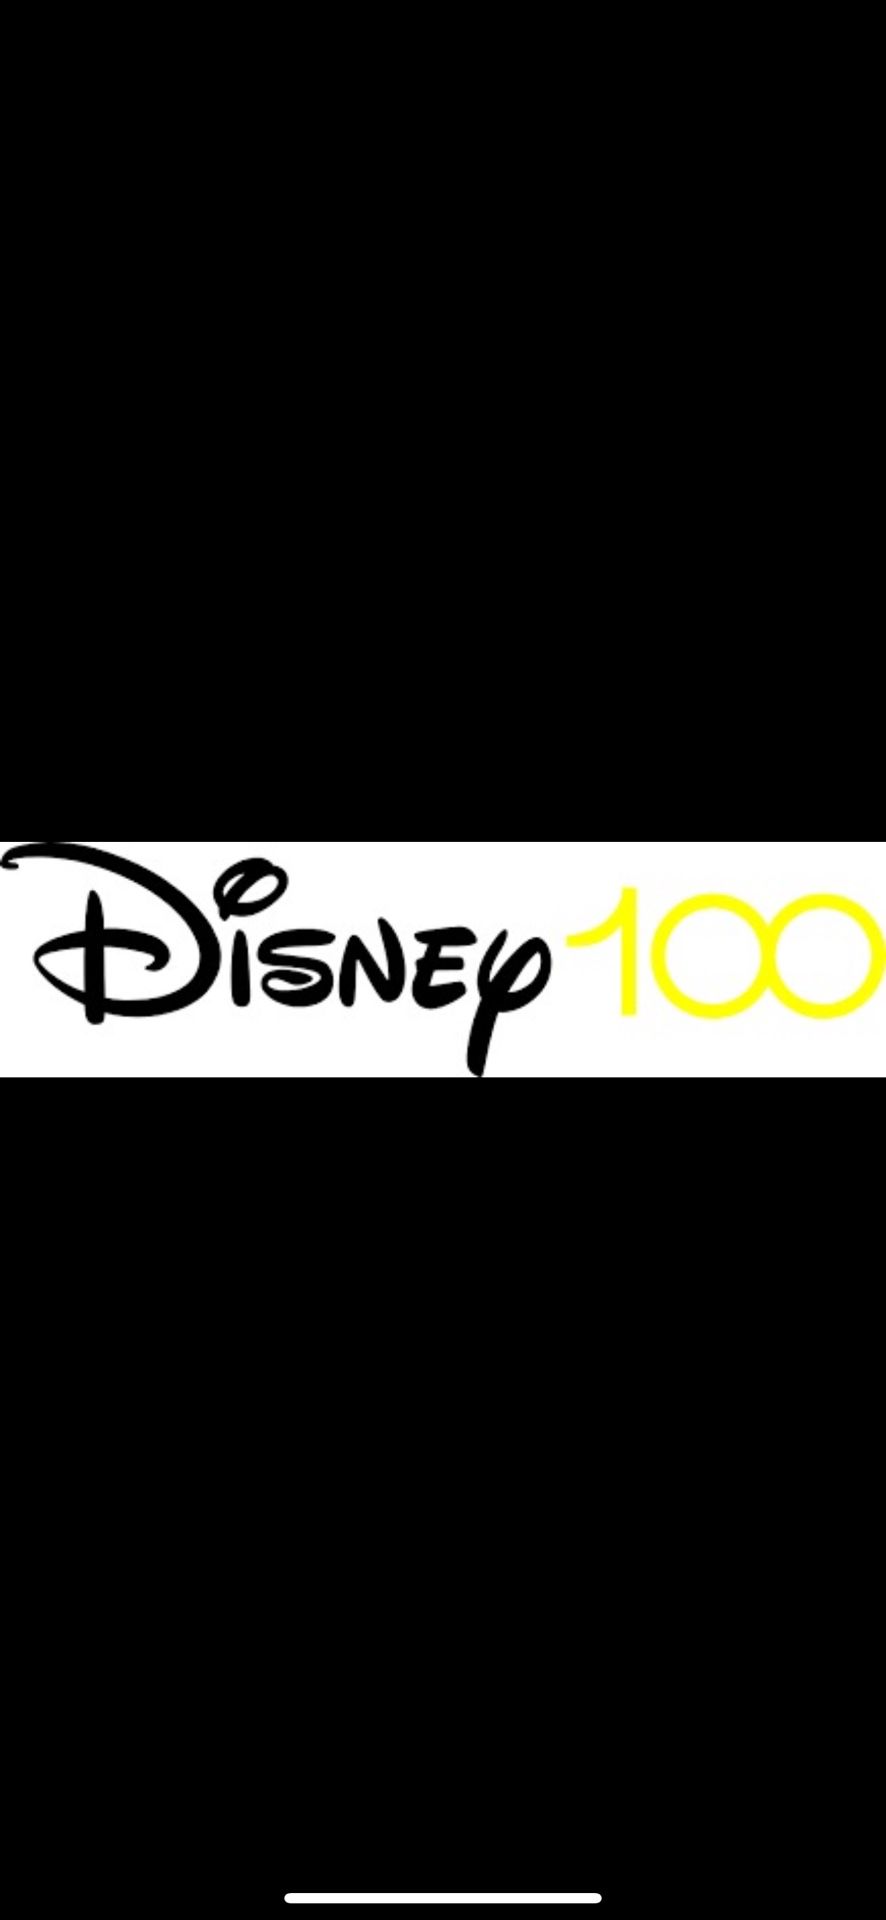 Disney Passes Limited Supply 